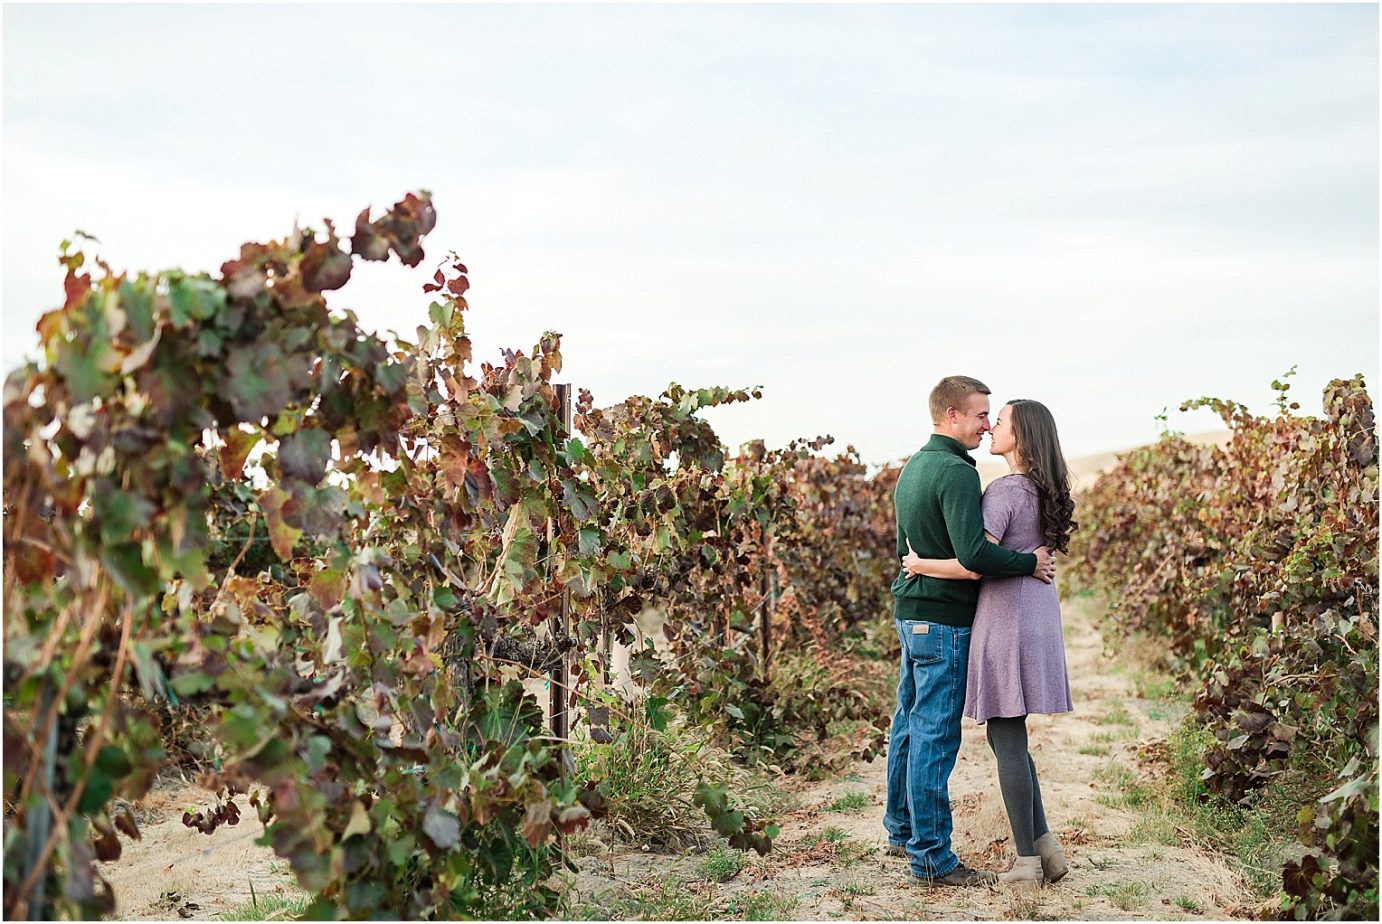 Kiona Winery Engagement Session Benton City WA Calvin and Kelly couple in vineyard